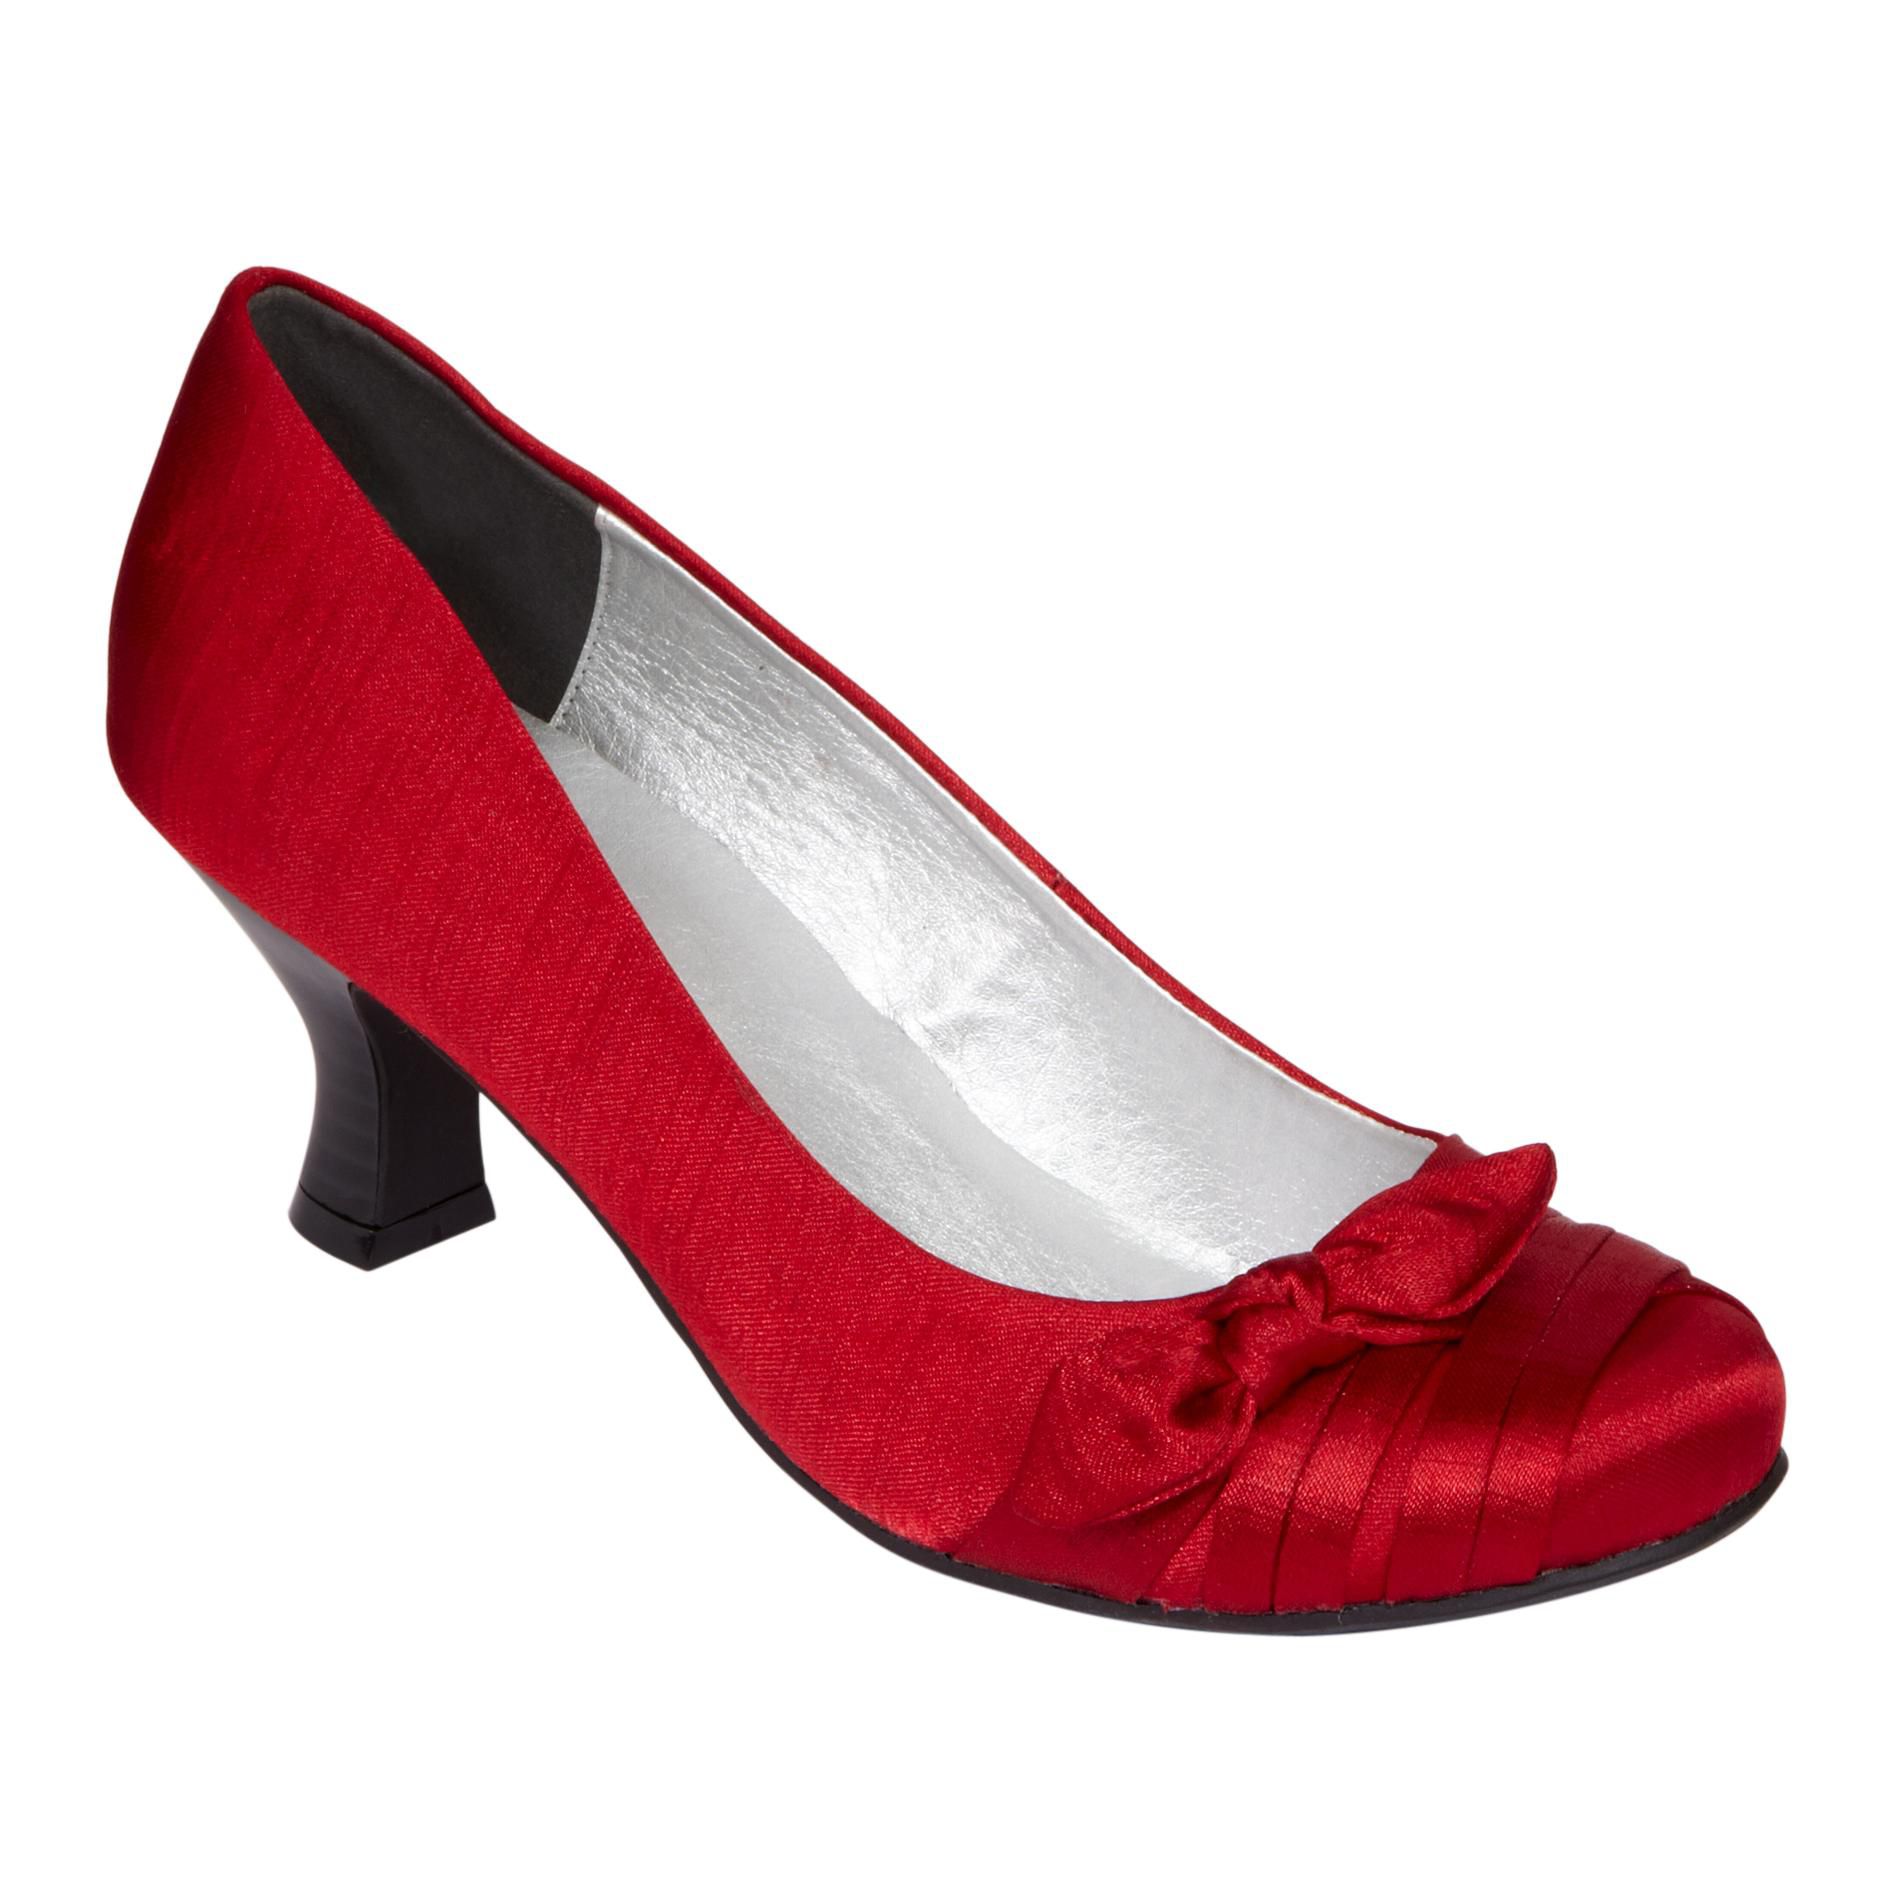 Metaphor Women's Tiana Dress Shoe - Red